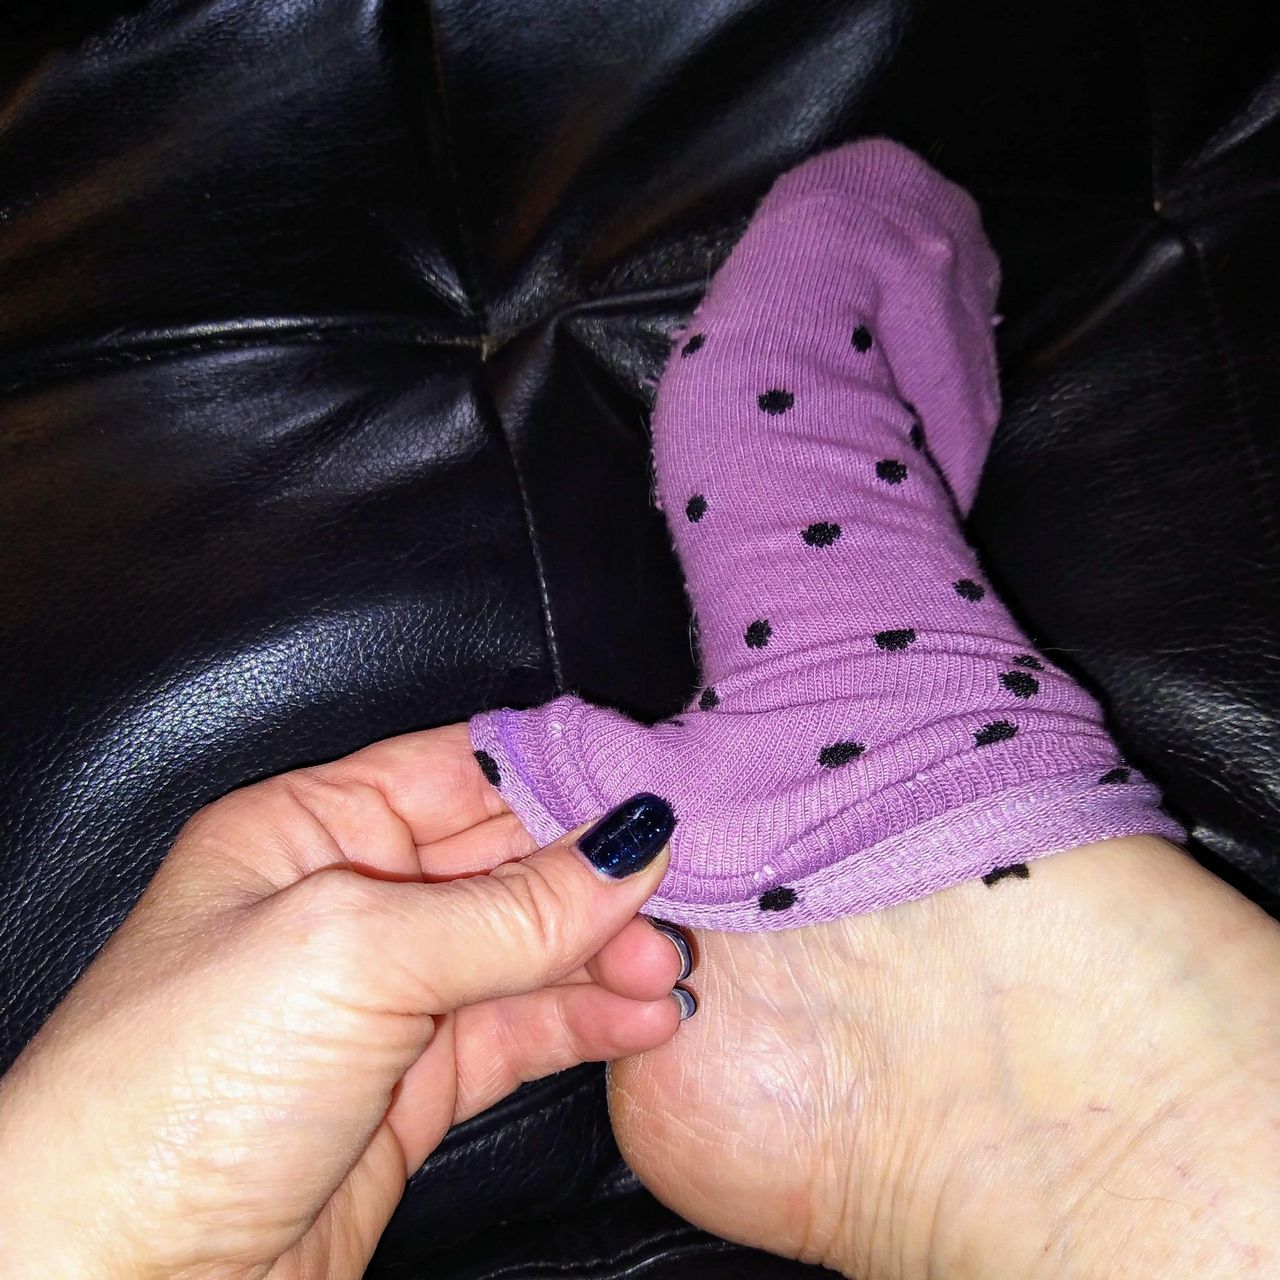 Tiptoes How Do You Like My Socks